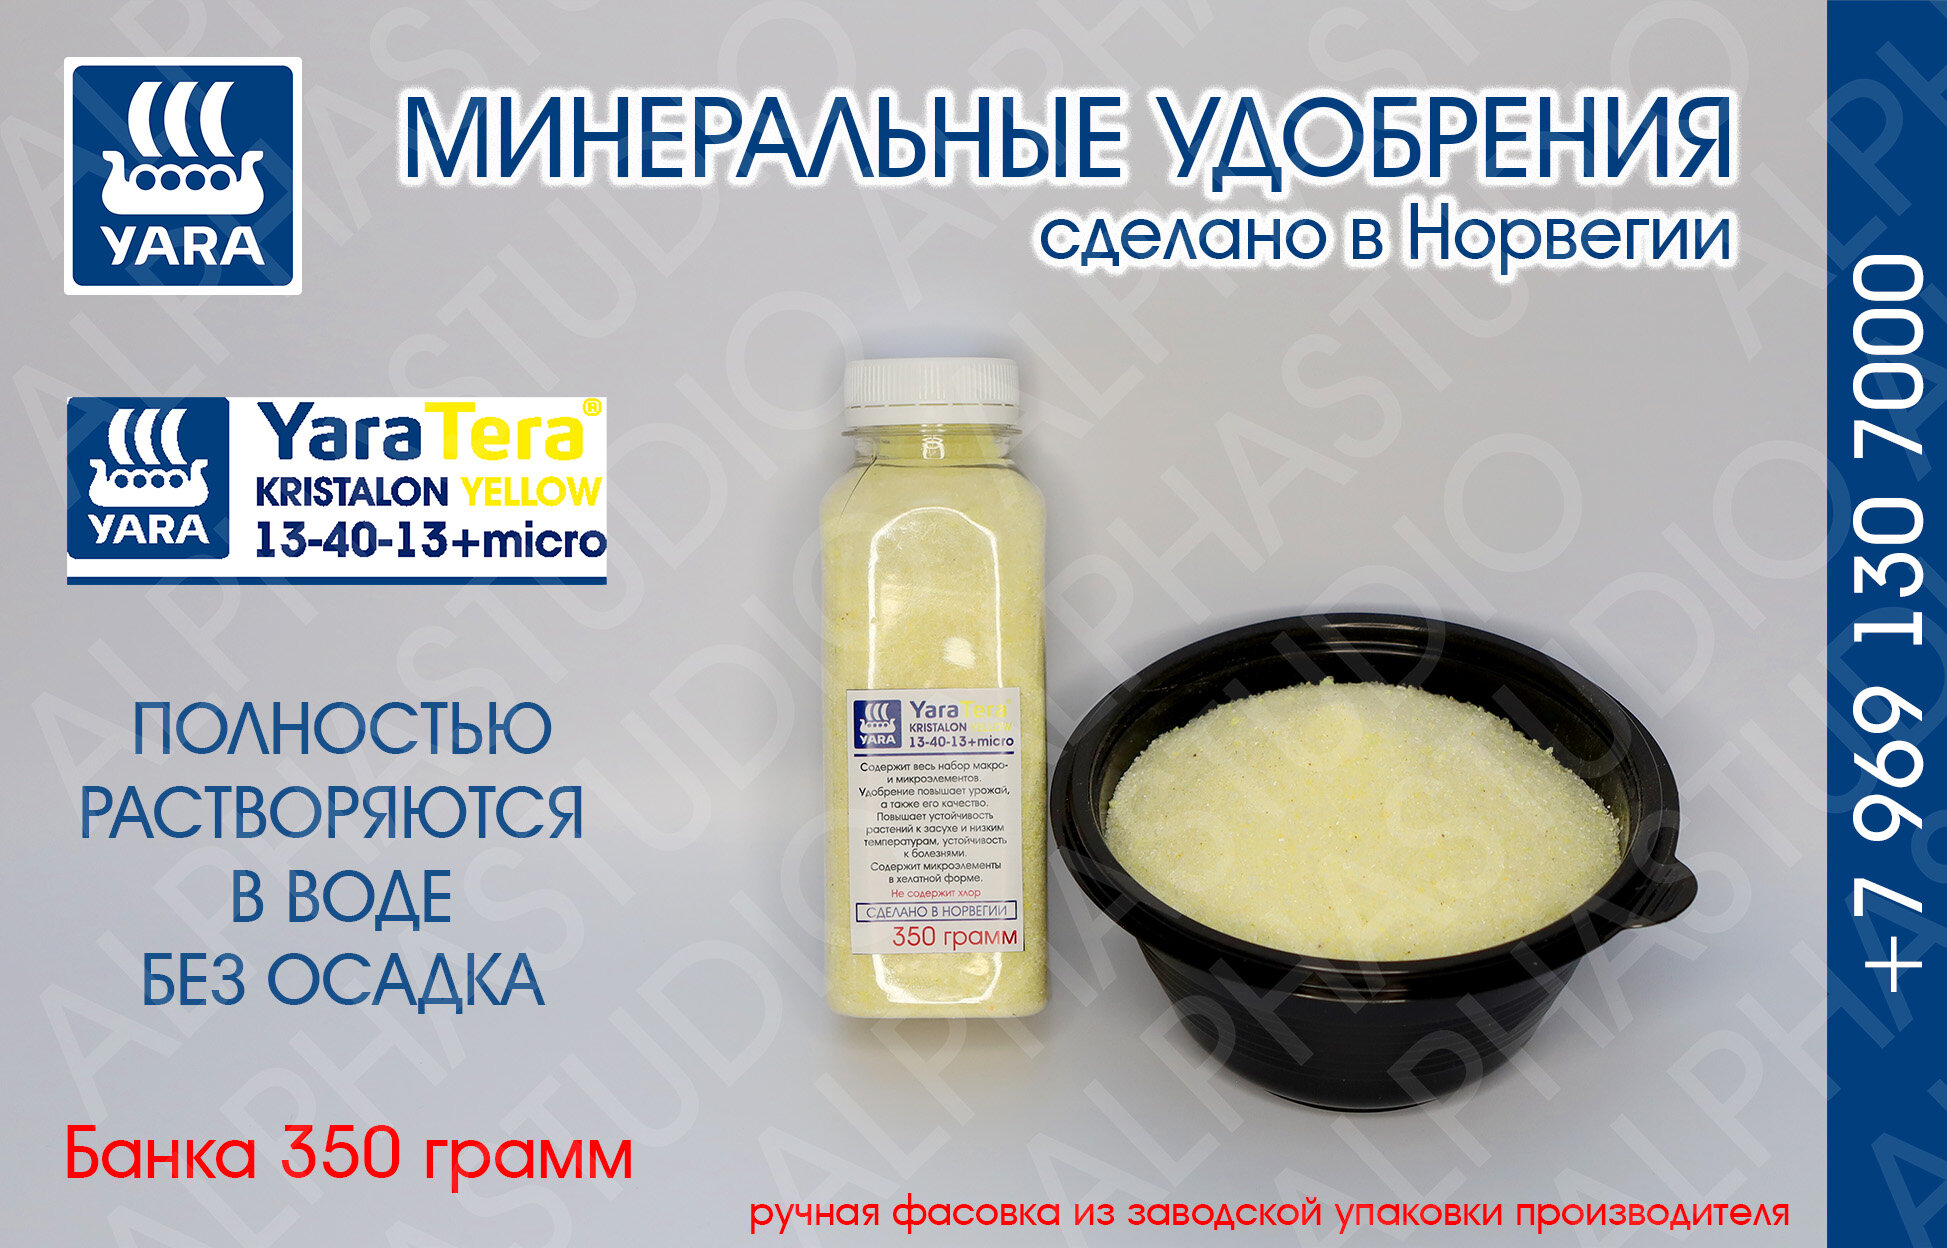 Минеральное удобрение YARA Tera Kristalon Yellow 13-40-13+micro. Банка 350 грамм